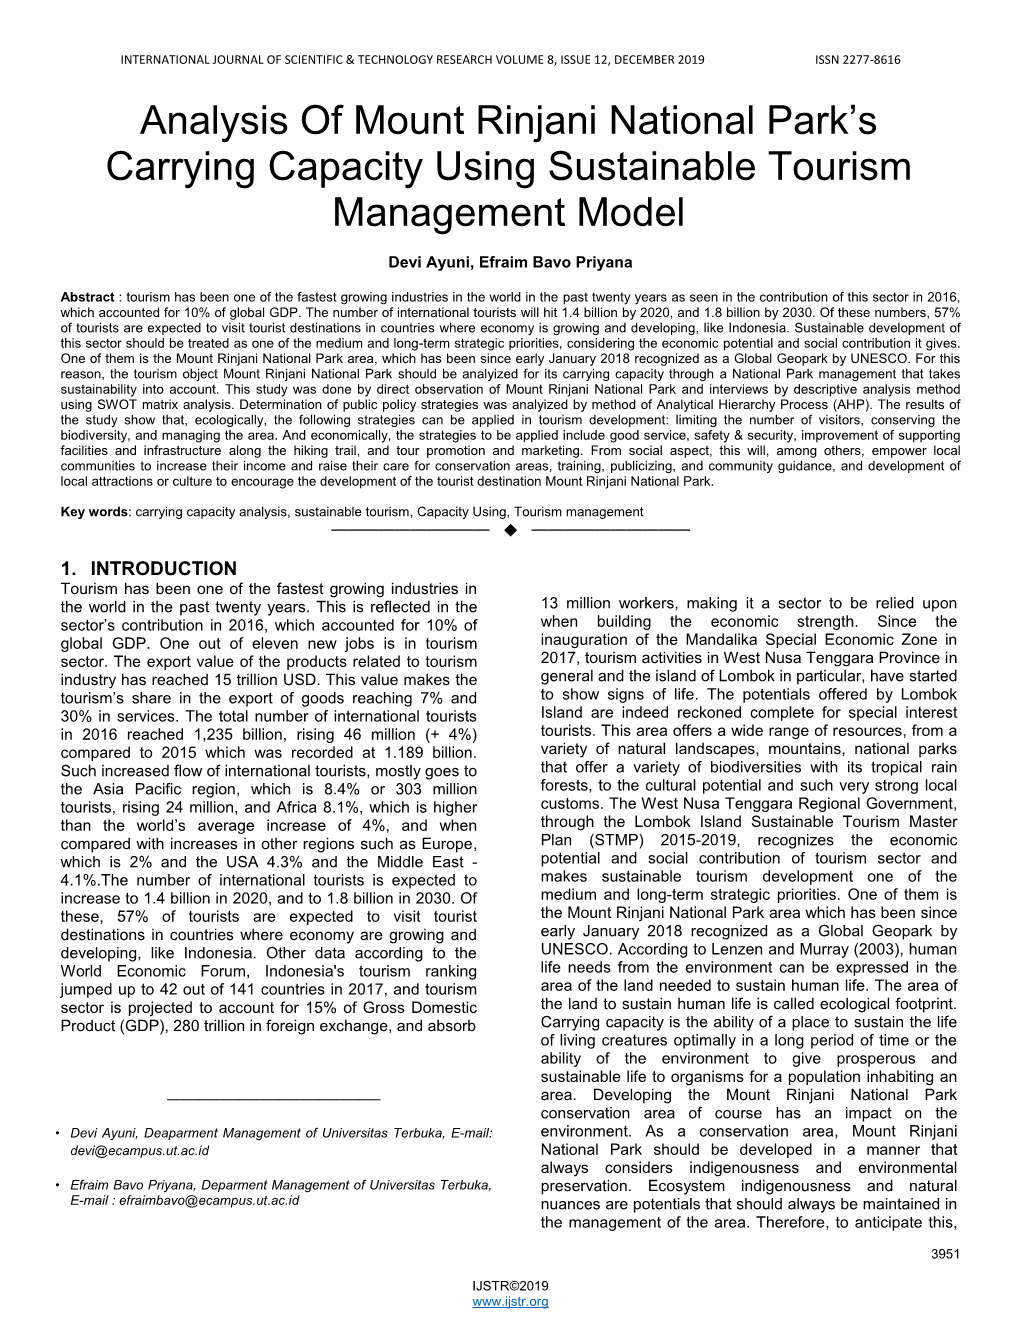 Analysis of Mount Rinjani National Park's Carrying Capacity Using Sustainable Tourism Management Model